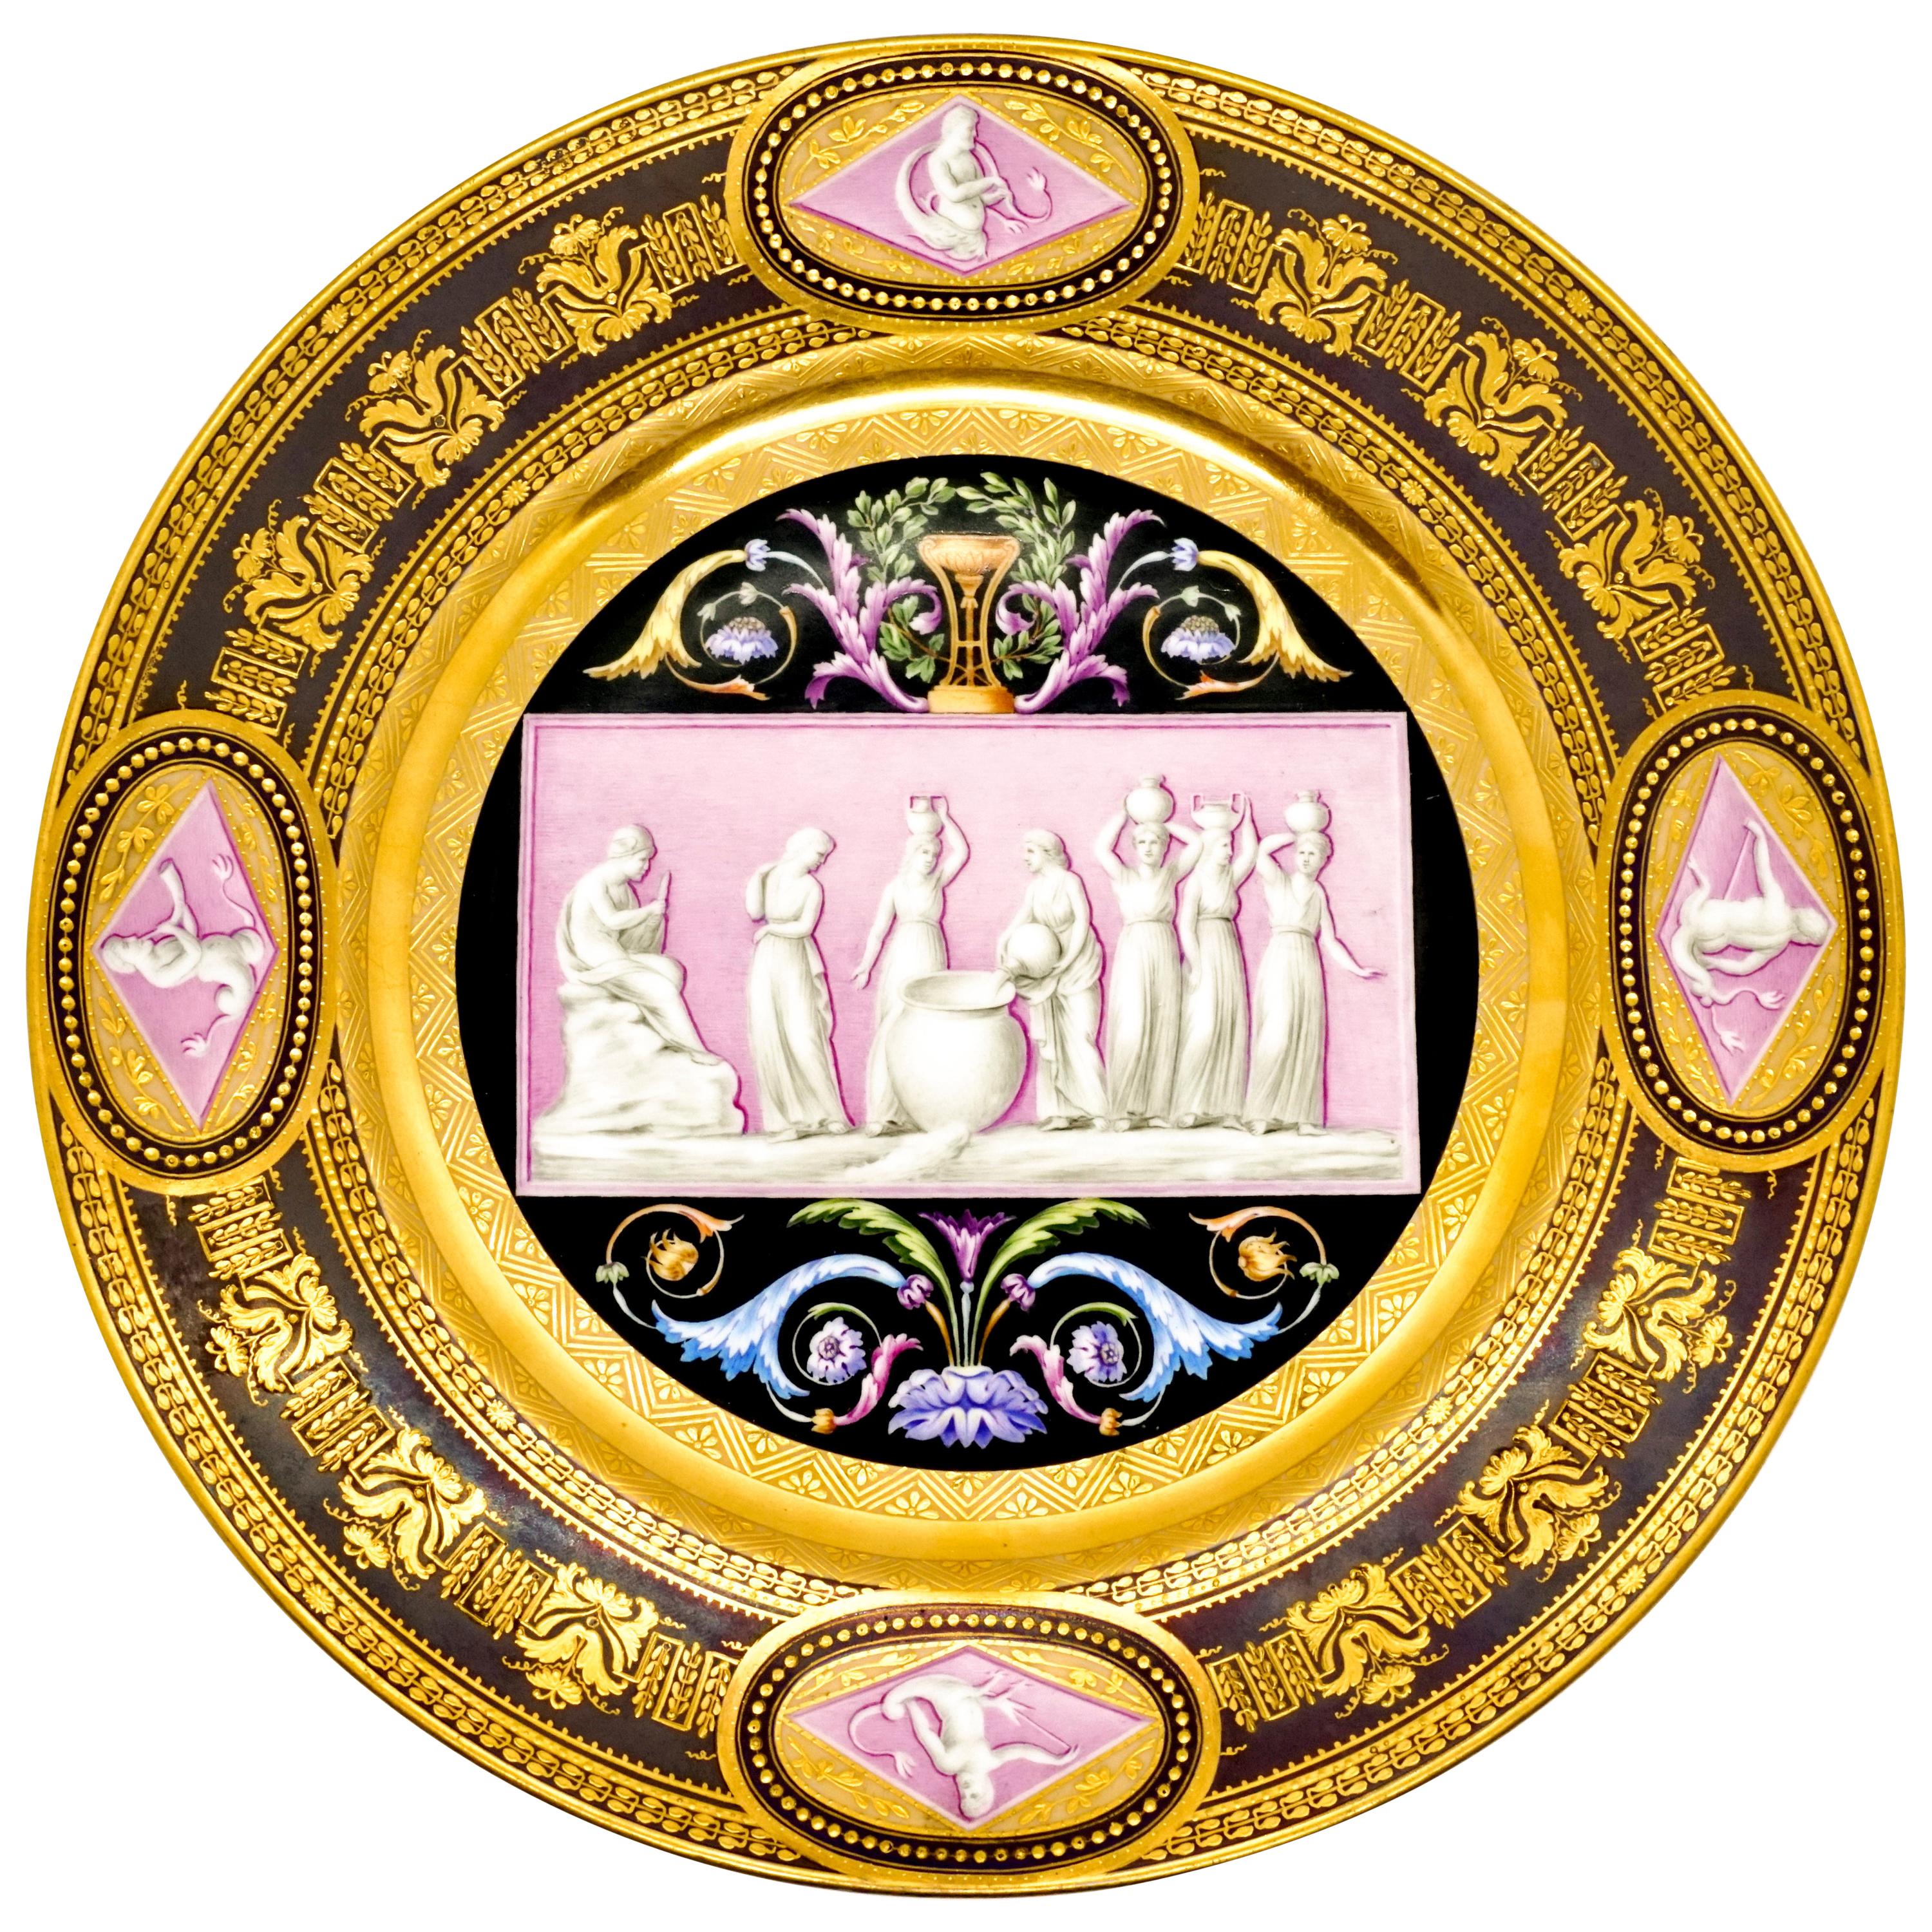 Viennese Imperial Porcelain Splendour Plate, Wien Sorgenthal Period, 1805